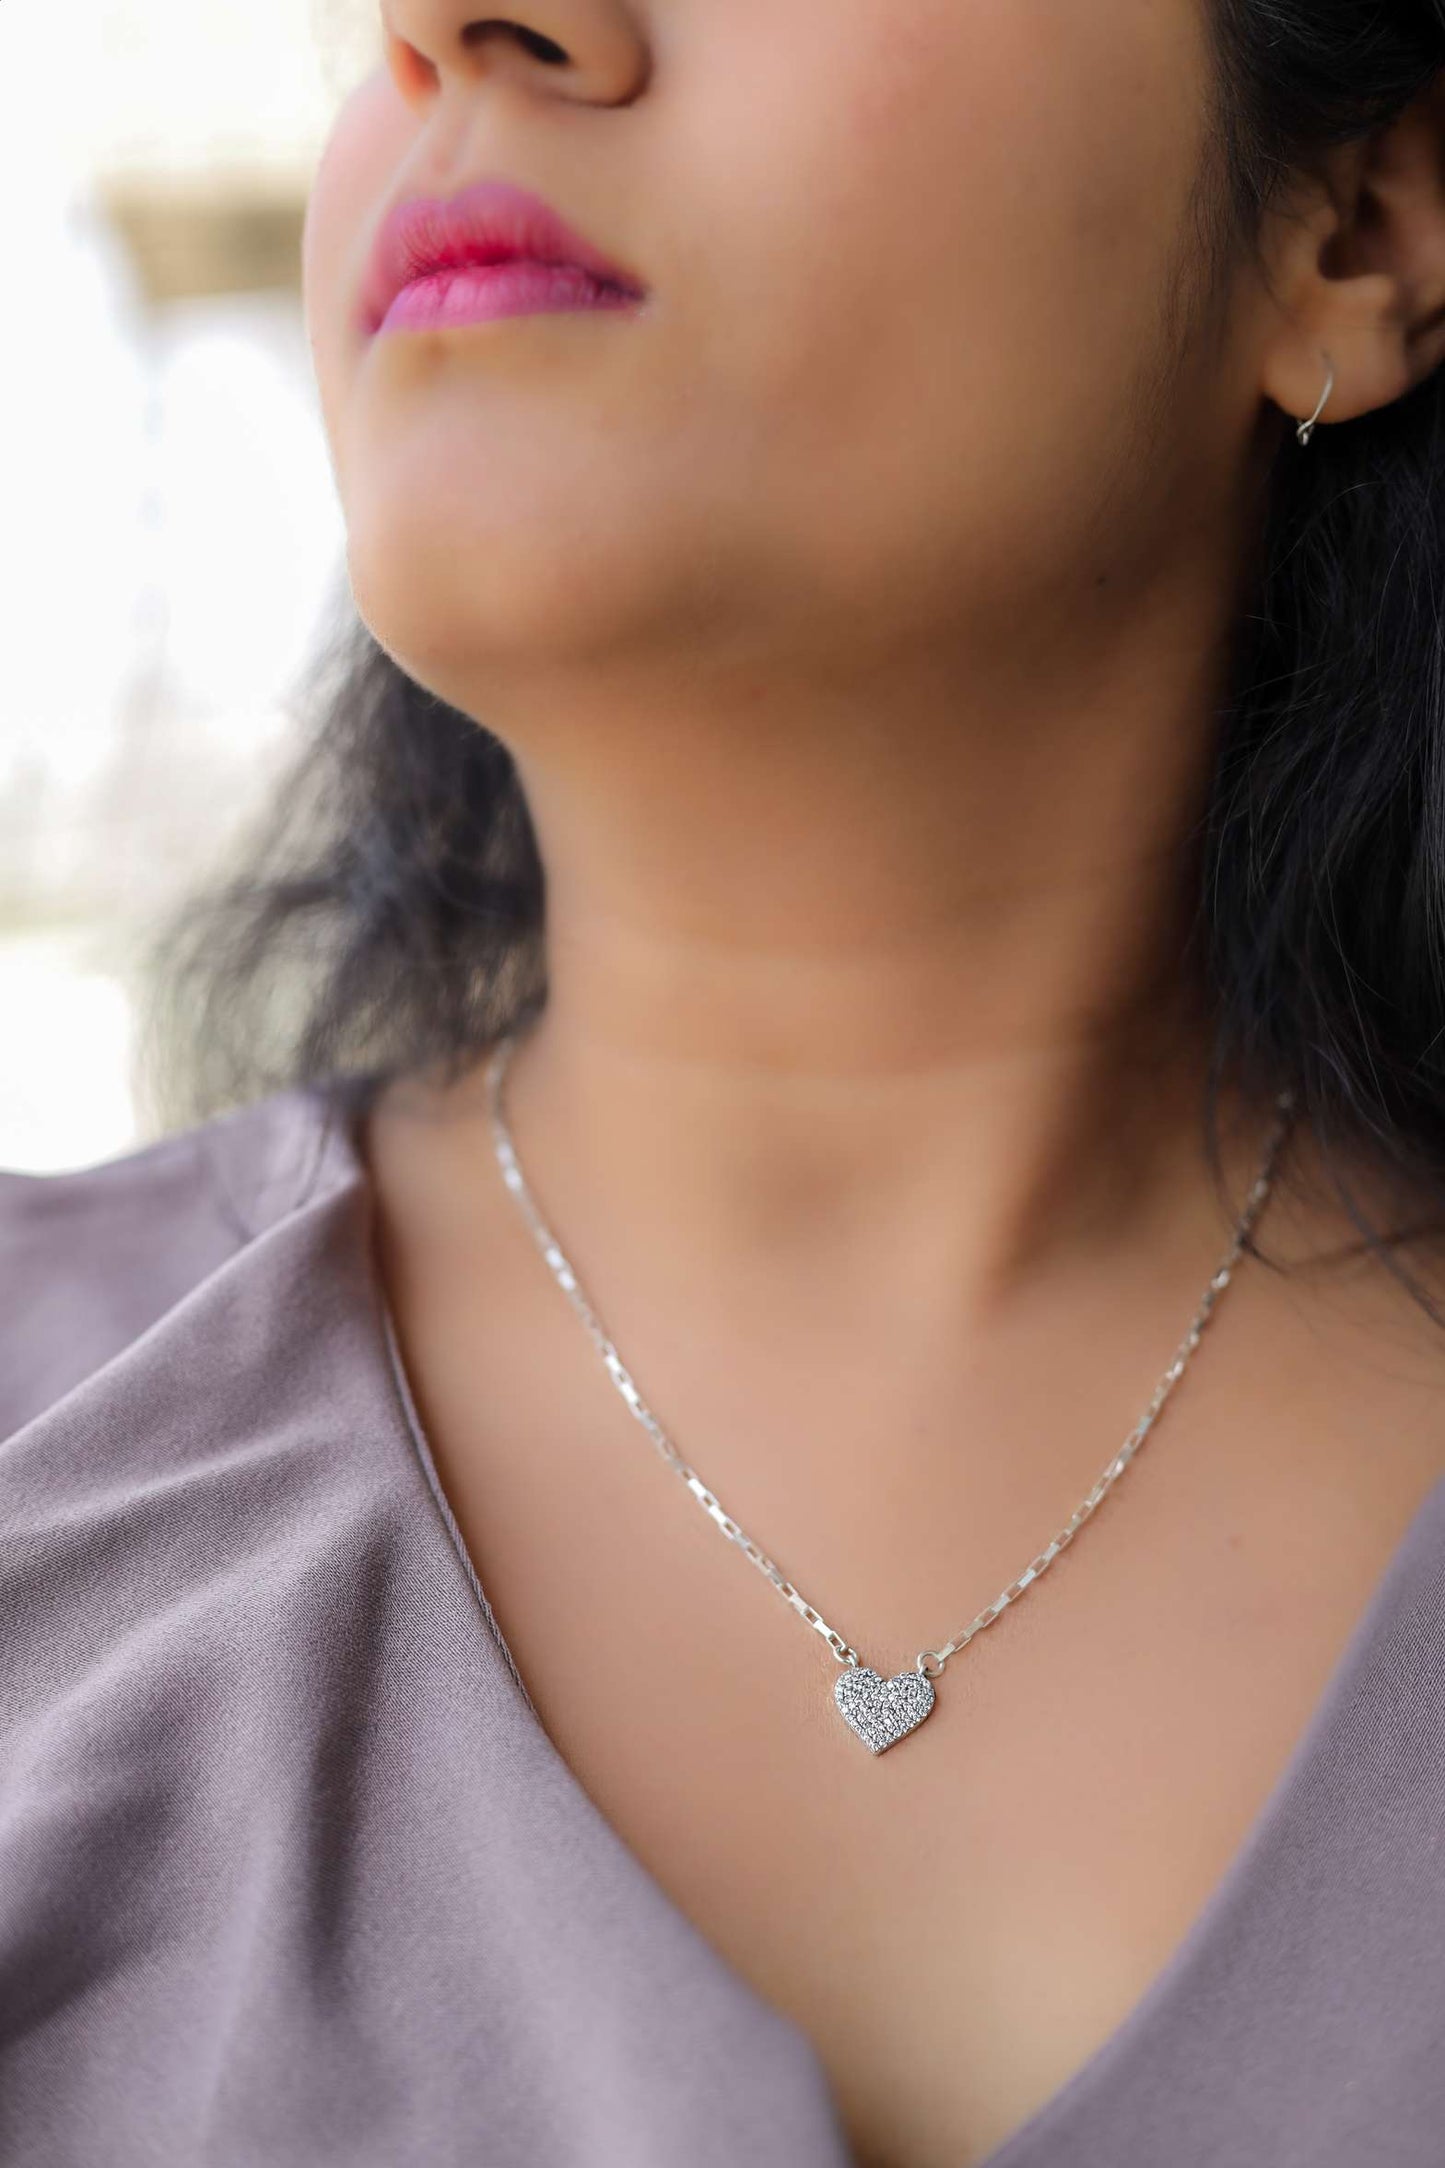 Heart Pave Diamond Pendant